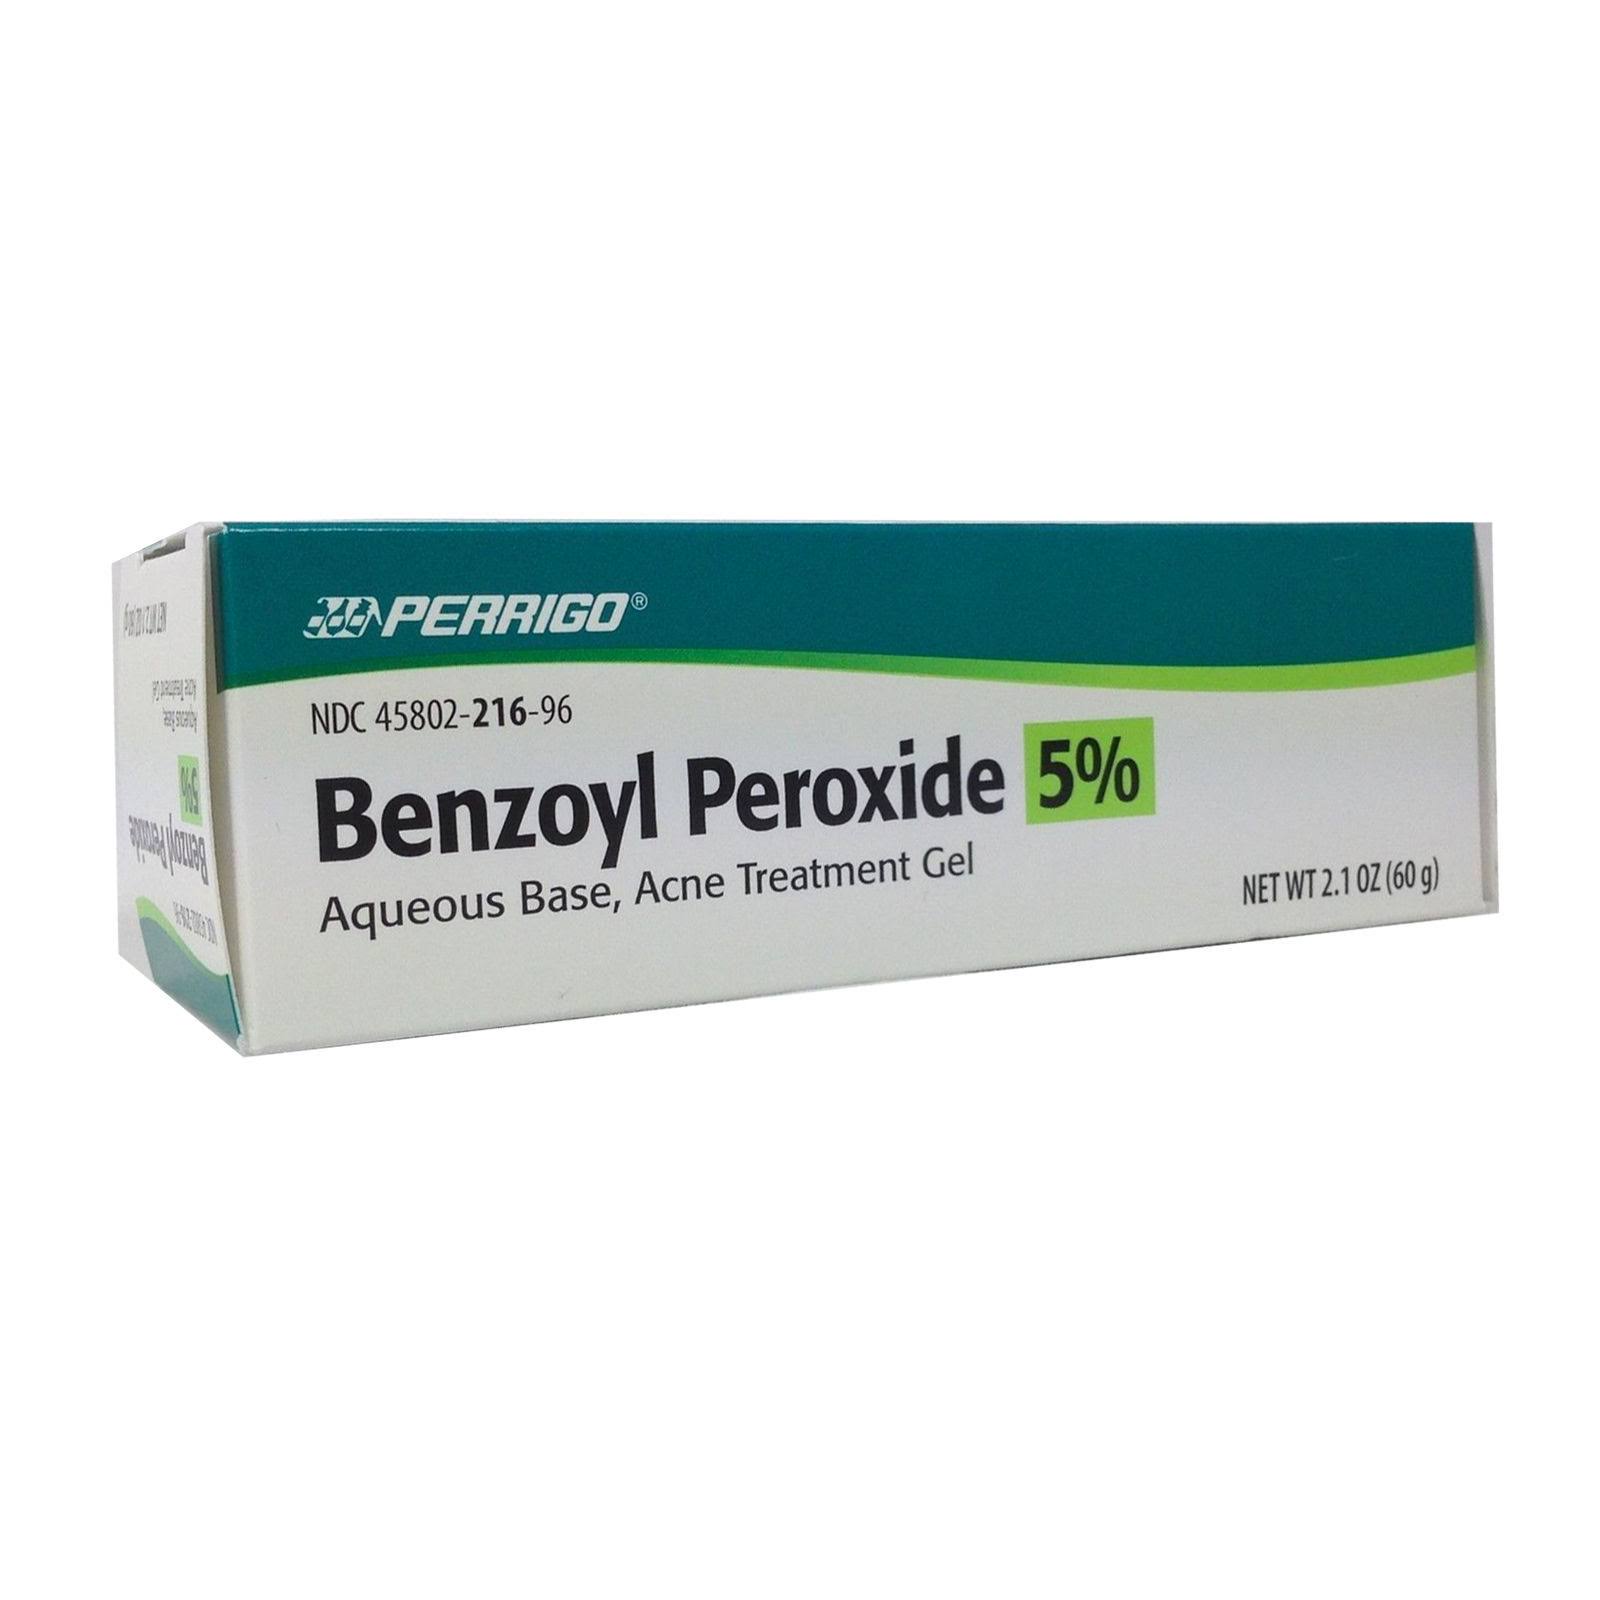 Perrigo Benzoyl Peroxide 5% Acne Treatment Gel - 2.1 oz tube